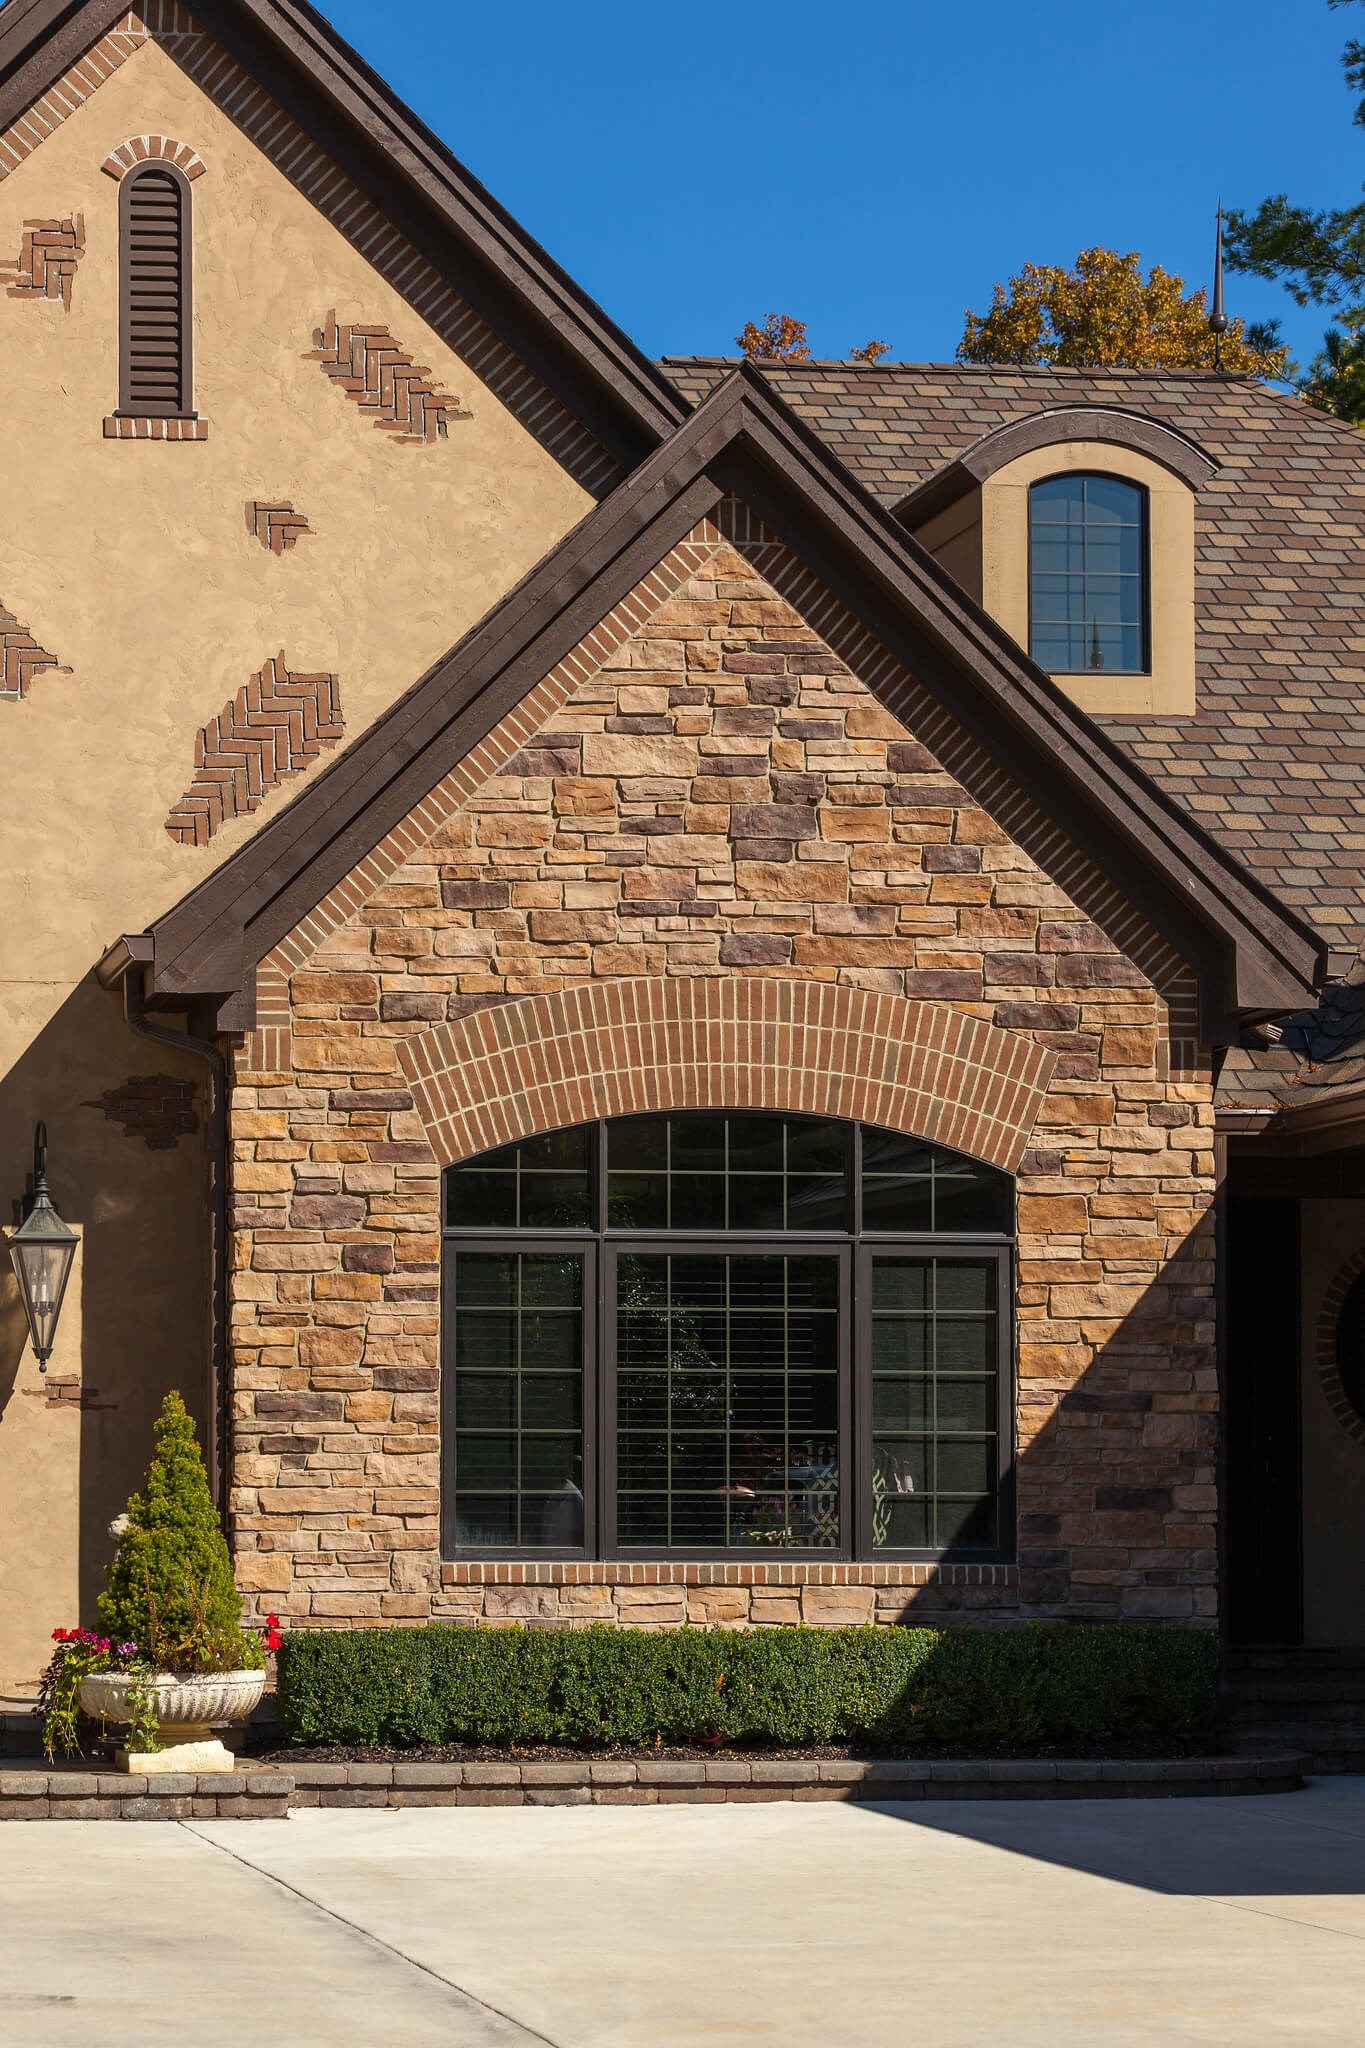 Glen-Gery | Glen Ridge Sonoma brown and tan building veneer stone on home exterior